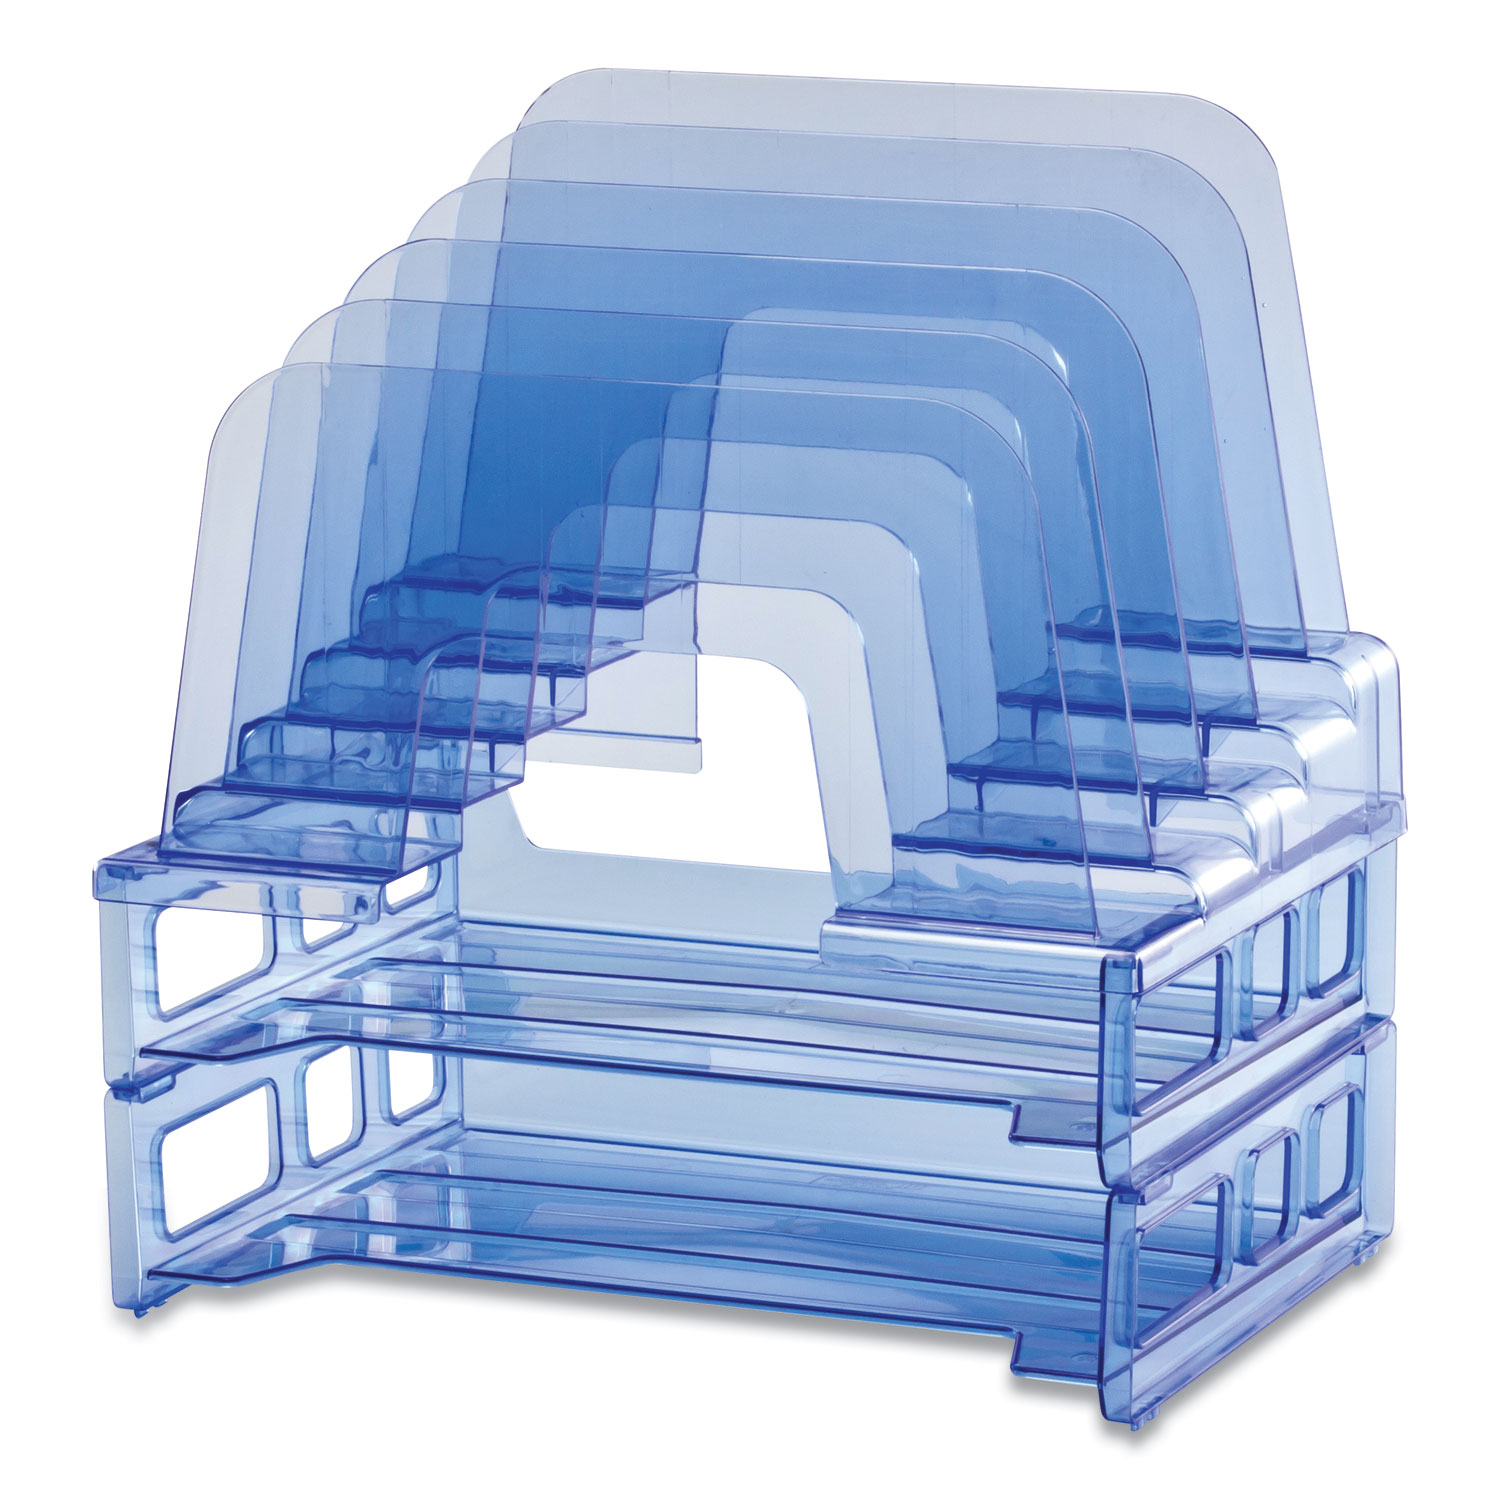  Officemate 23221 Blue Glacier Desktop File Organizer, 7 Sections, Letter-Size, 12.5 x 8.63 x 10.75, Blue (OIC116388) 